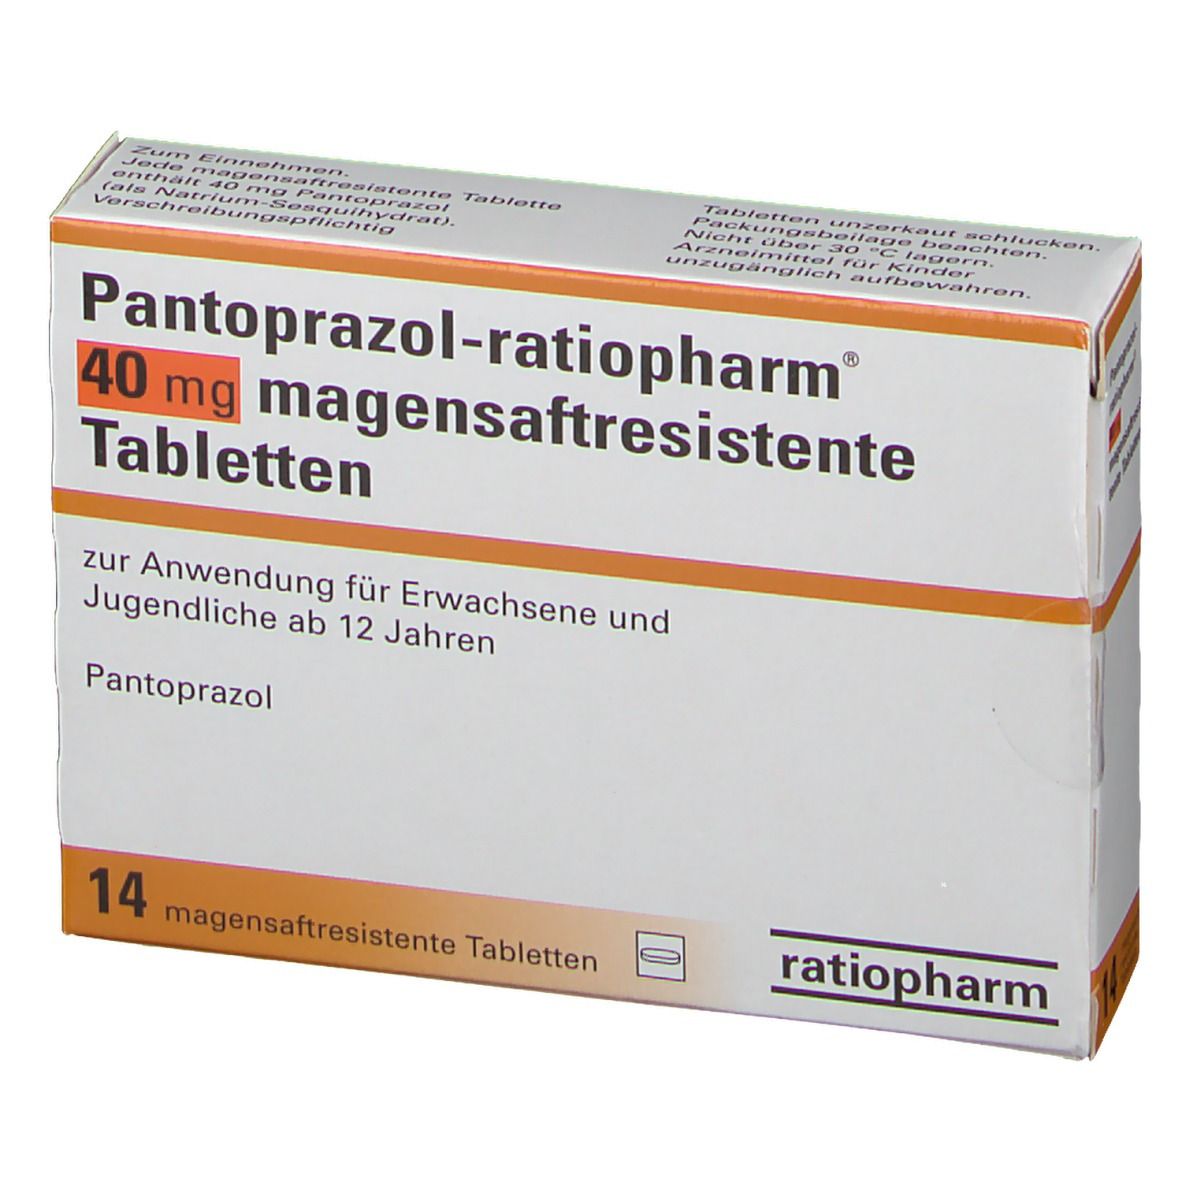 Pantoprazol-ratiopharm® 40 mg